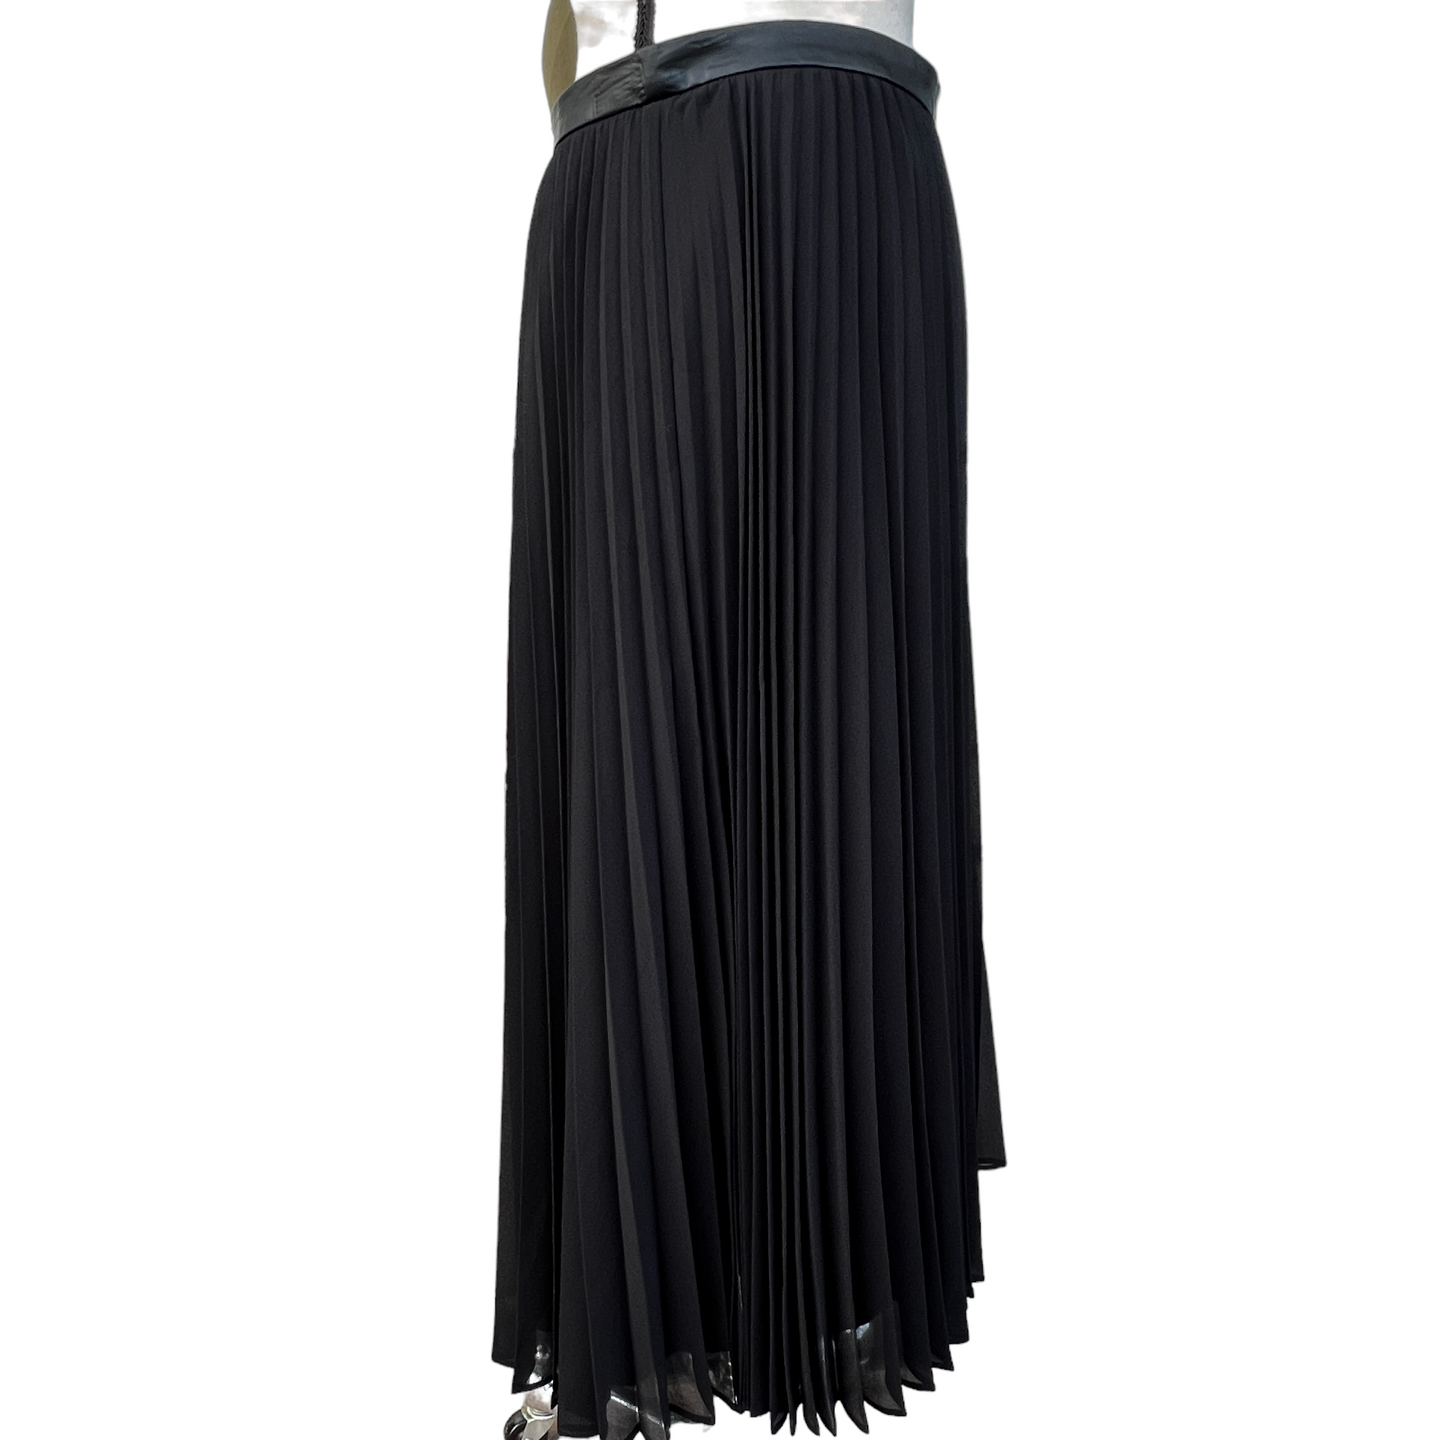 Black Chiffon Pleated Women Skirt Faux Leather Size 8